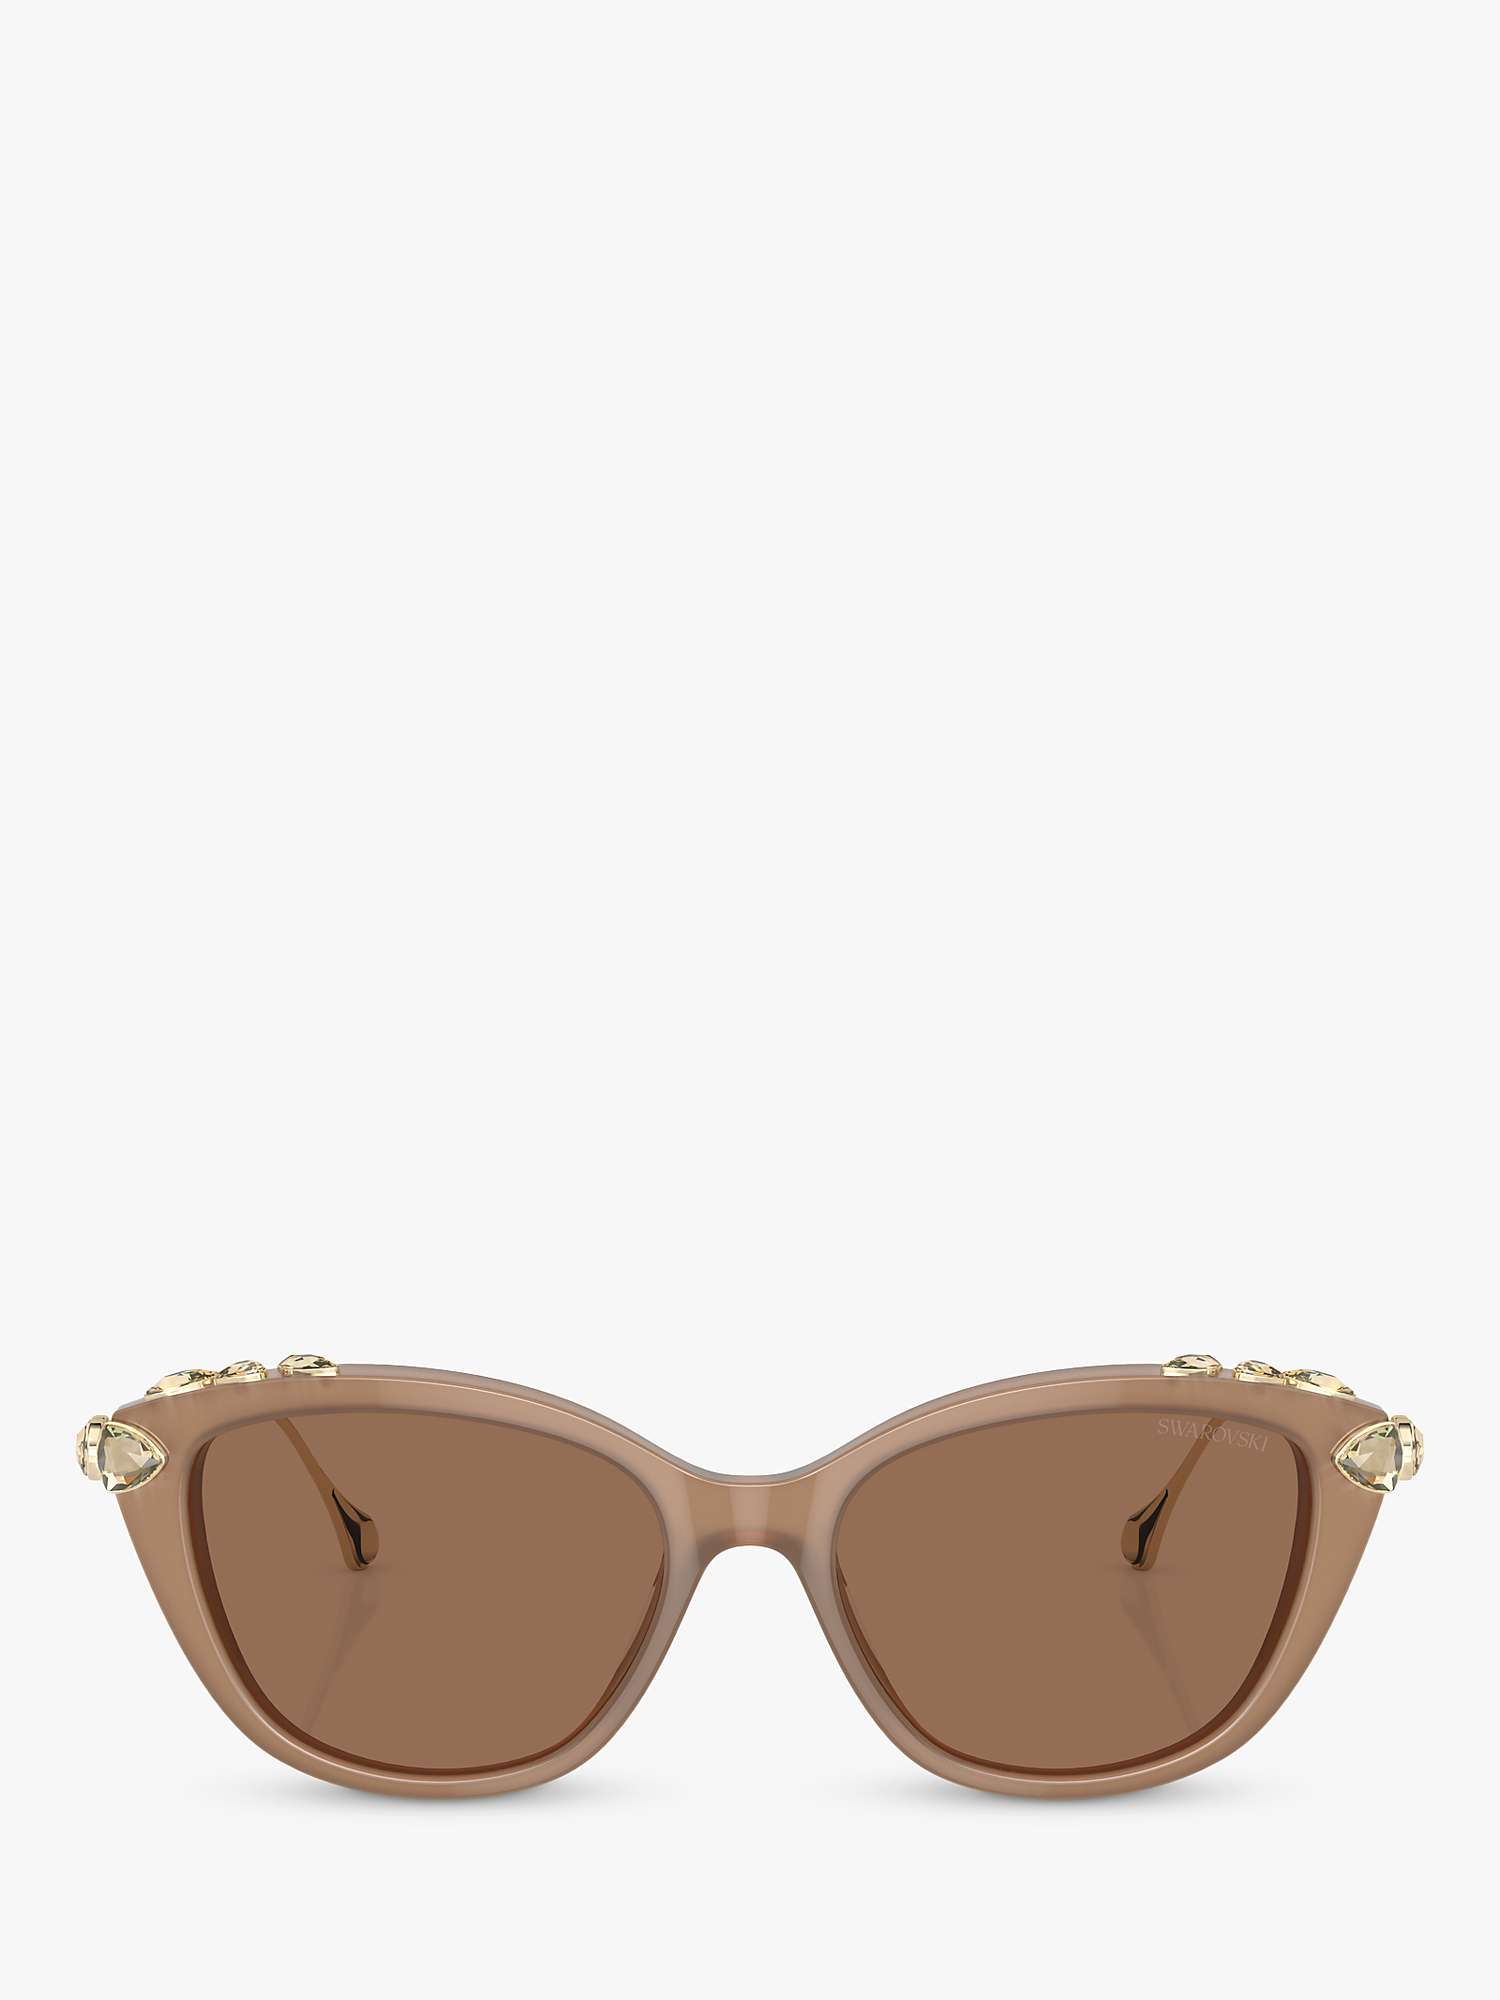 Buy Swarovski SK6010 Women's Cat's Eye Sunglasses, Opal Beige/Bronze Online at johnlewis.com